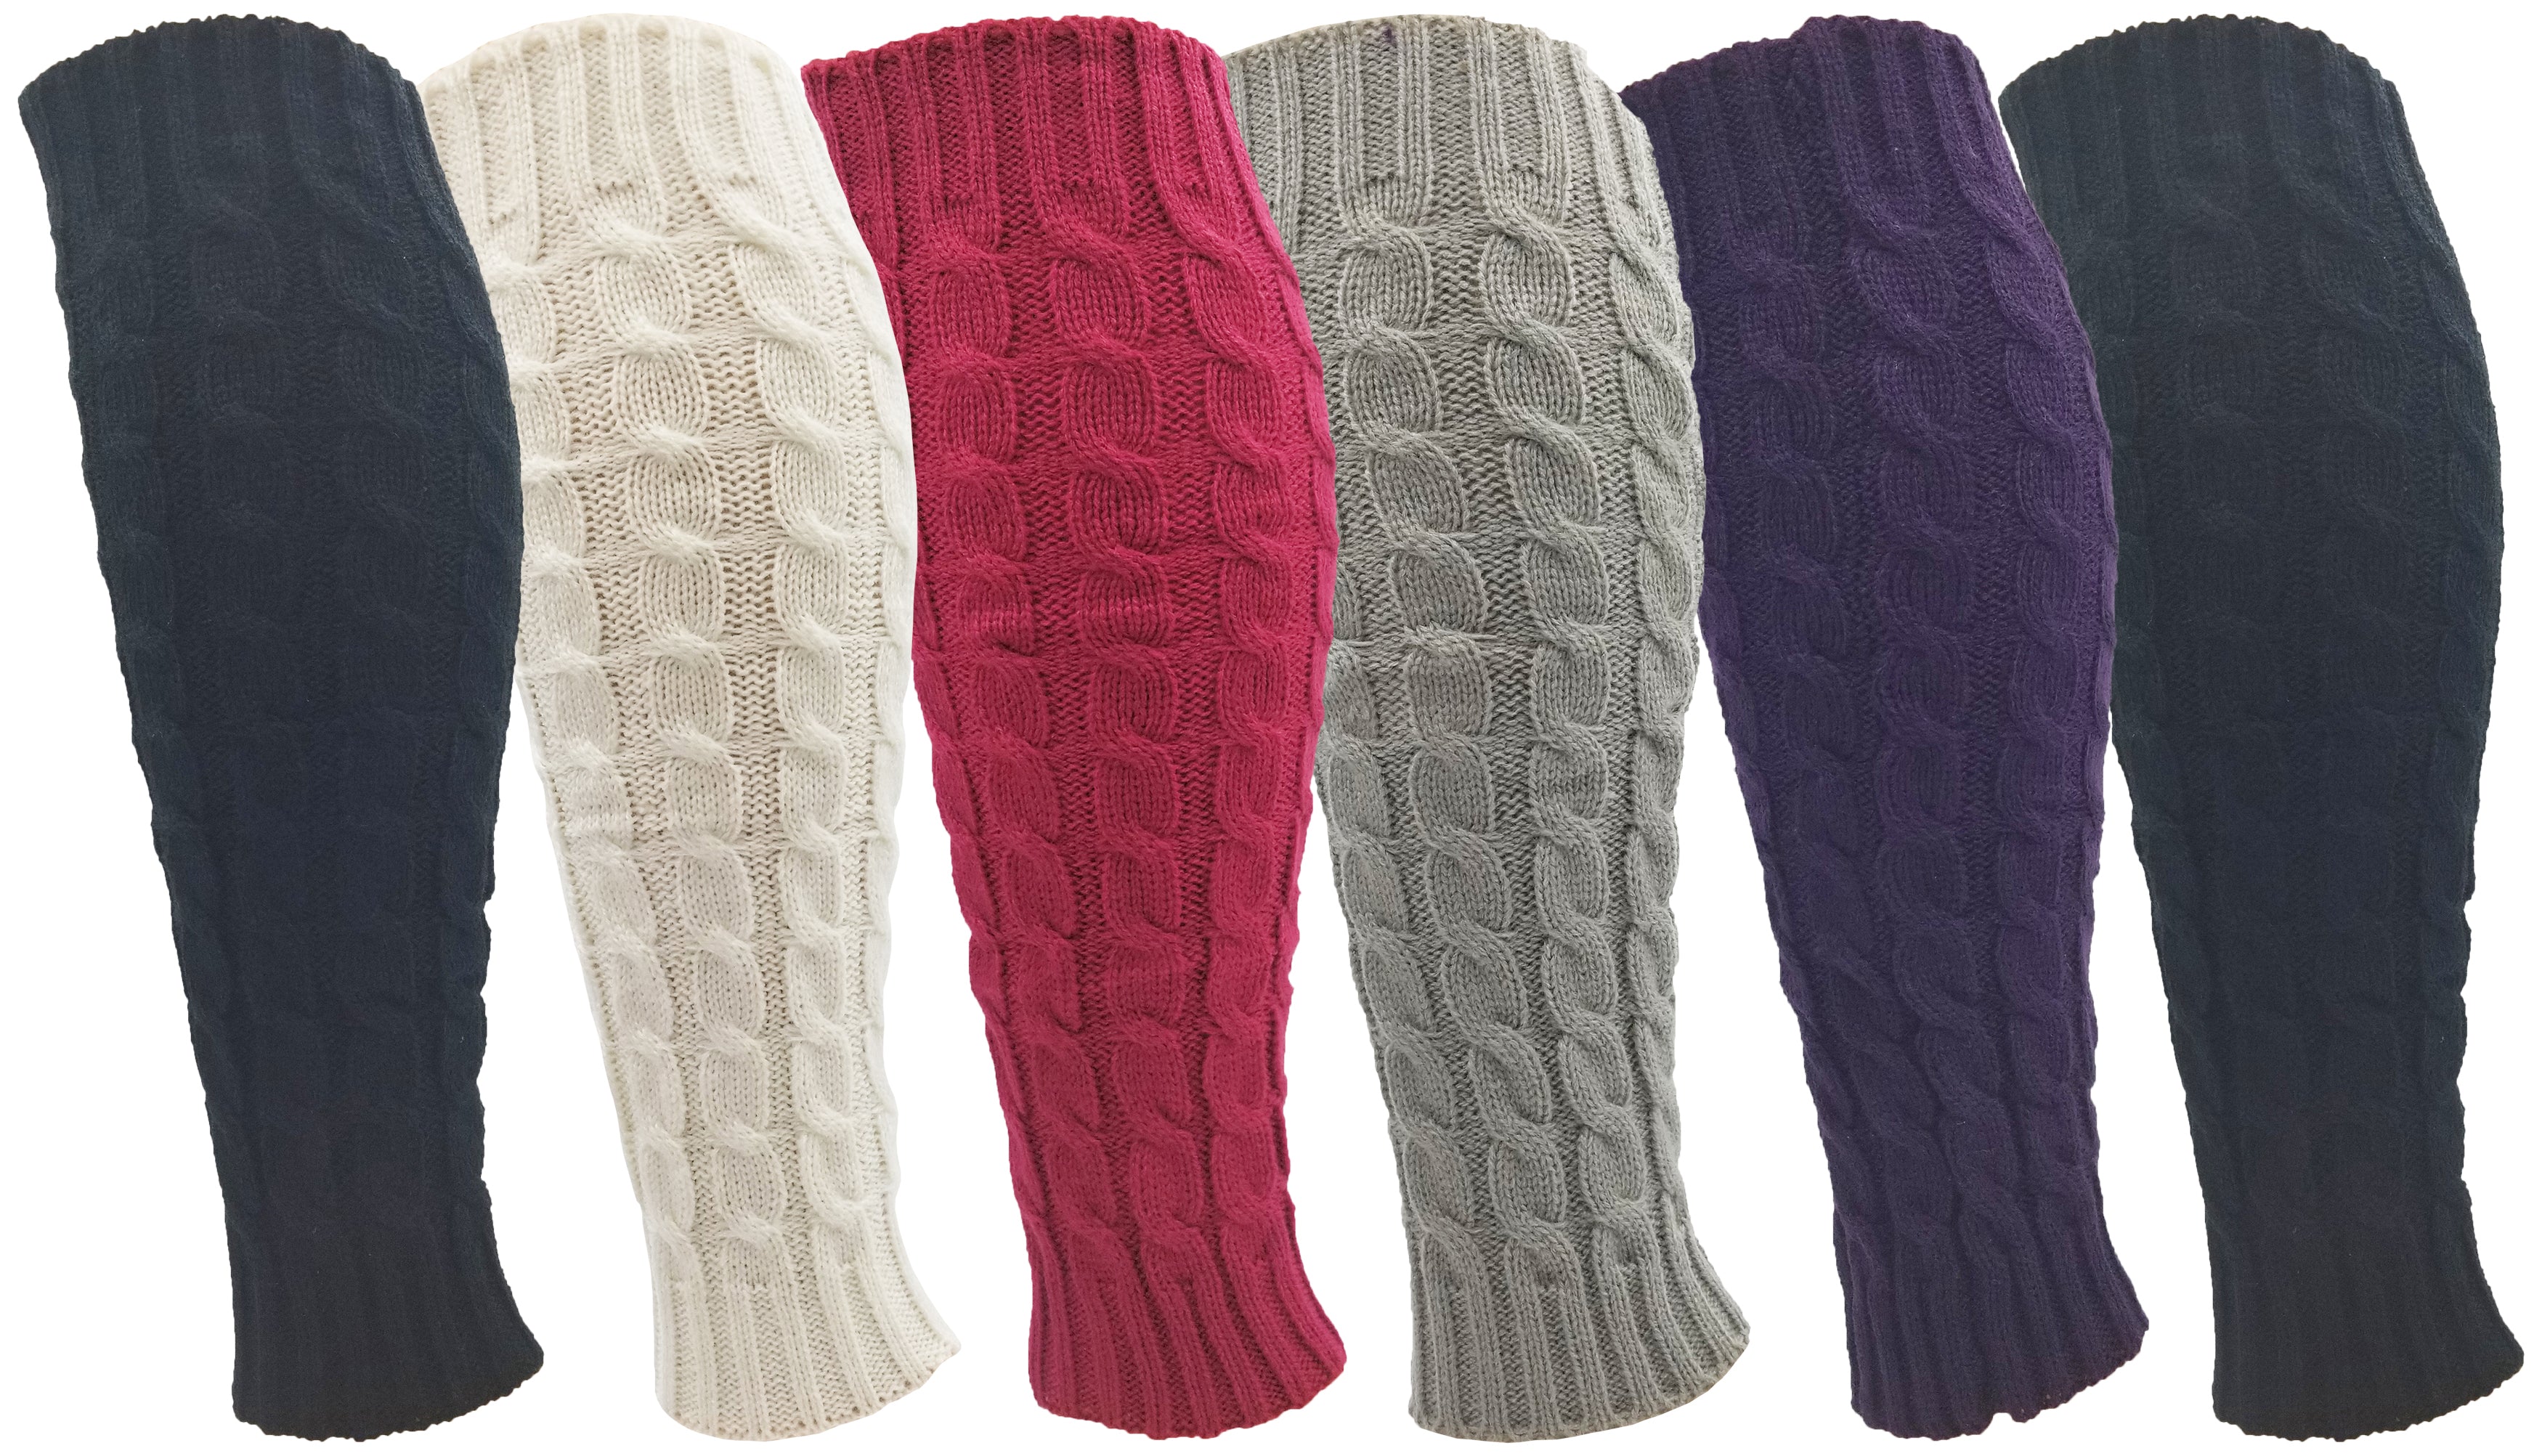 Buy Foot Traffic Women's Cable-Knit Leg Warmers, Warm & Long